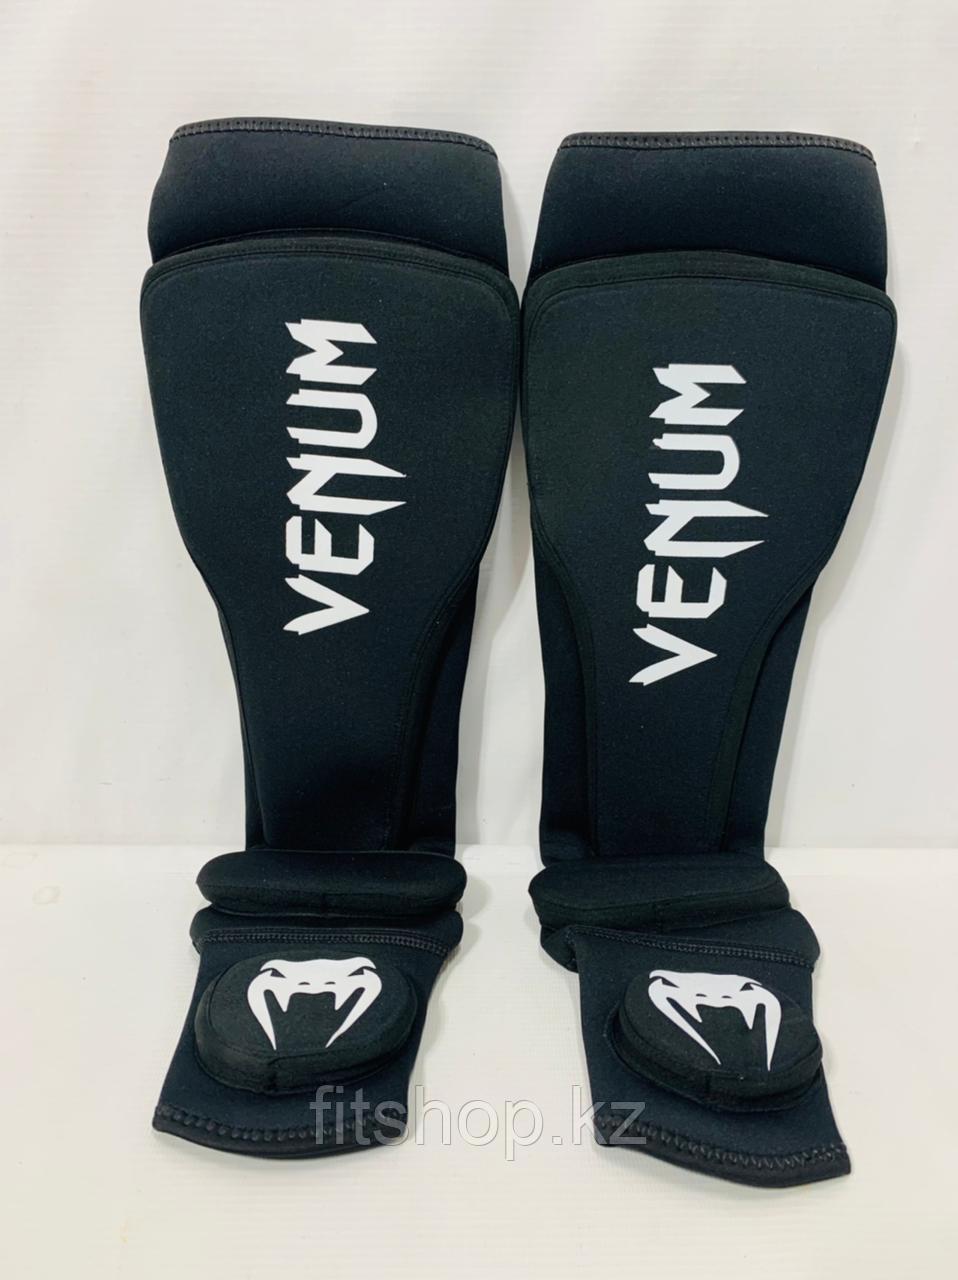 Футы накладки ,защита для ног Venum